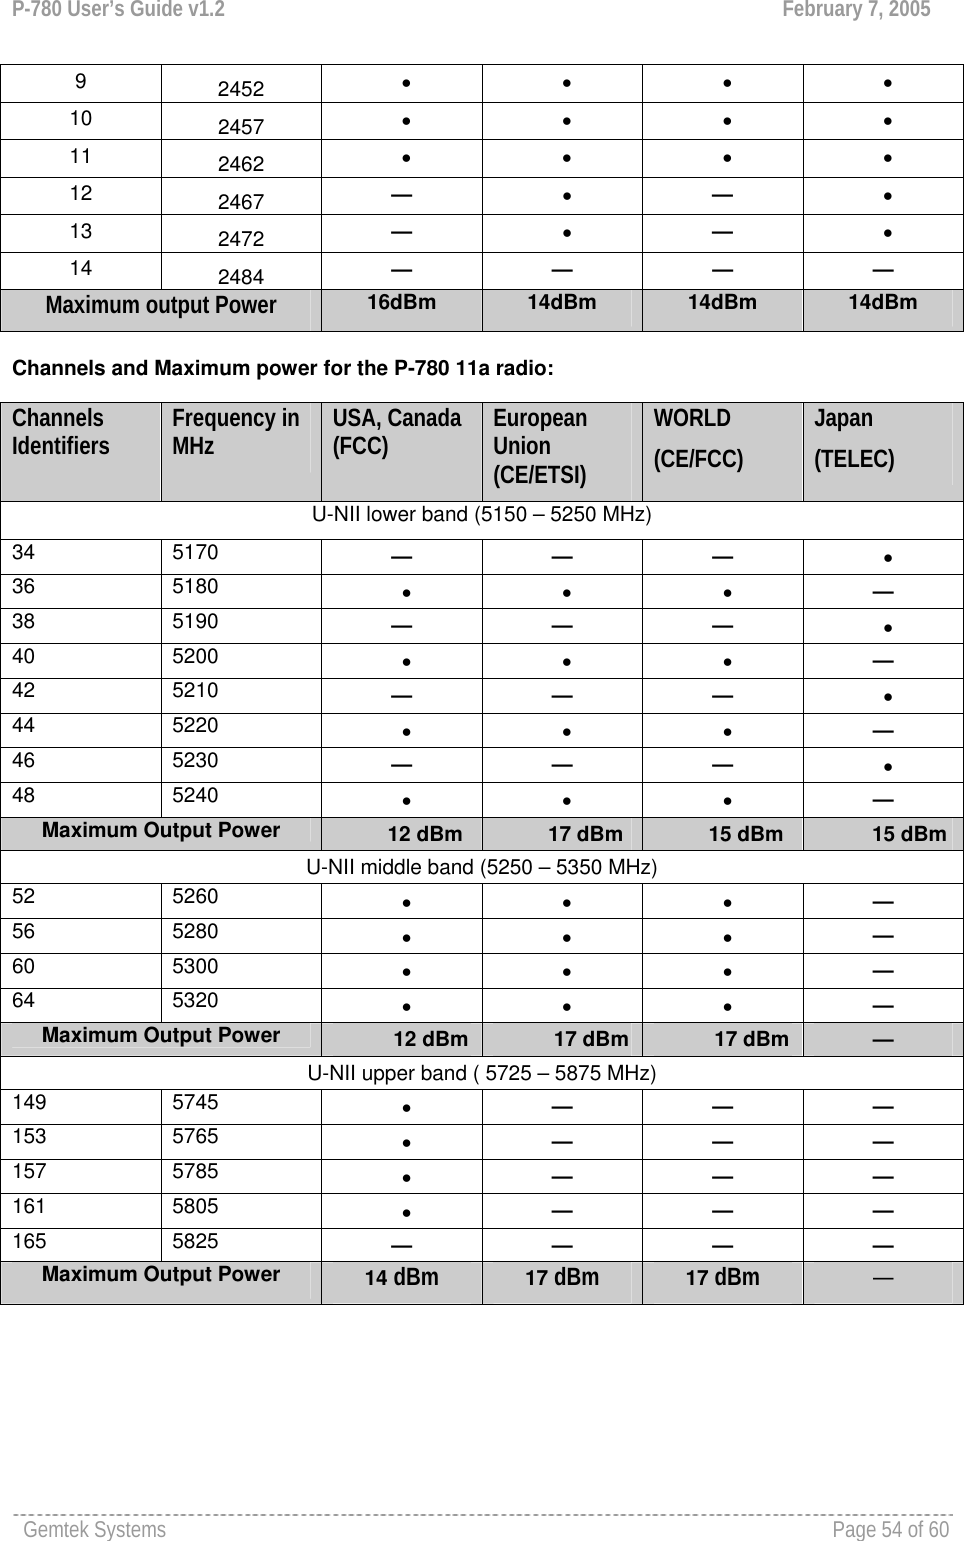 P-780 User’s Guide v1.2  February 7, 2005 Gemtek Systems  Page 54 of 60   9  2452  •   •   •   •  10  2457  •   •   •   •  11  2462  •   •   •   •  12  2467  —  •   — •  13  2472  —  •   — •  14  2484  — — — — Maximum output Power   16dBm  14dBm  14dBm  14dBm  Channels and Maximum power for the P-780 11a radio:   Channels Identifiers  Frequency in MHz  USA, Canada (FCC)  European Union (CE/ETSI) WORLD (CE/FCC)  Japan (TELEC) U-NII lower band (5150 – 5250 MHz) 34 5170  — — —  •  36 5180  •   •   •   — 38 5190  — — —  •  40 5200  •   •   •   — 42 5210  — — —  •  44 5220  •   •   •   — 46 5230  — — —  •  48 5240  •   •   •   — Maximum Output Power      12 dBm    17 dBm    15 dBm            15 dBmU-NII middle band (5250 – 5350 MHz) 52                  5260  •   •   •   — 56                  5280  •   •   •   — 60        5300  •   •   •   — 64 5320  •   •   •   — Maximum Output Power      12 dBm     17 dBm     17 dBm  — U-NII upper band ( 5725 – 5875 MHz) 149 5745  •   — — — 153 5765  •   — — — 157 5785  •   — — — 161 5805  •   — — — 165 5825  — — — — Maximum Output Power   14 dBm 17 dBm 17 dBm —  